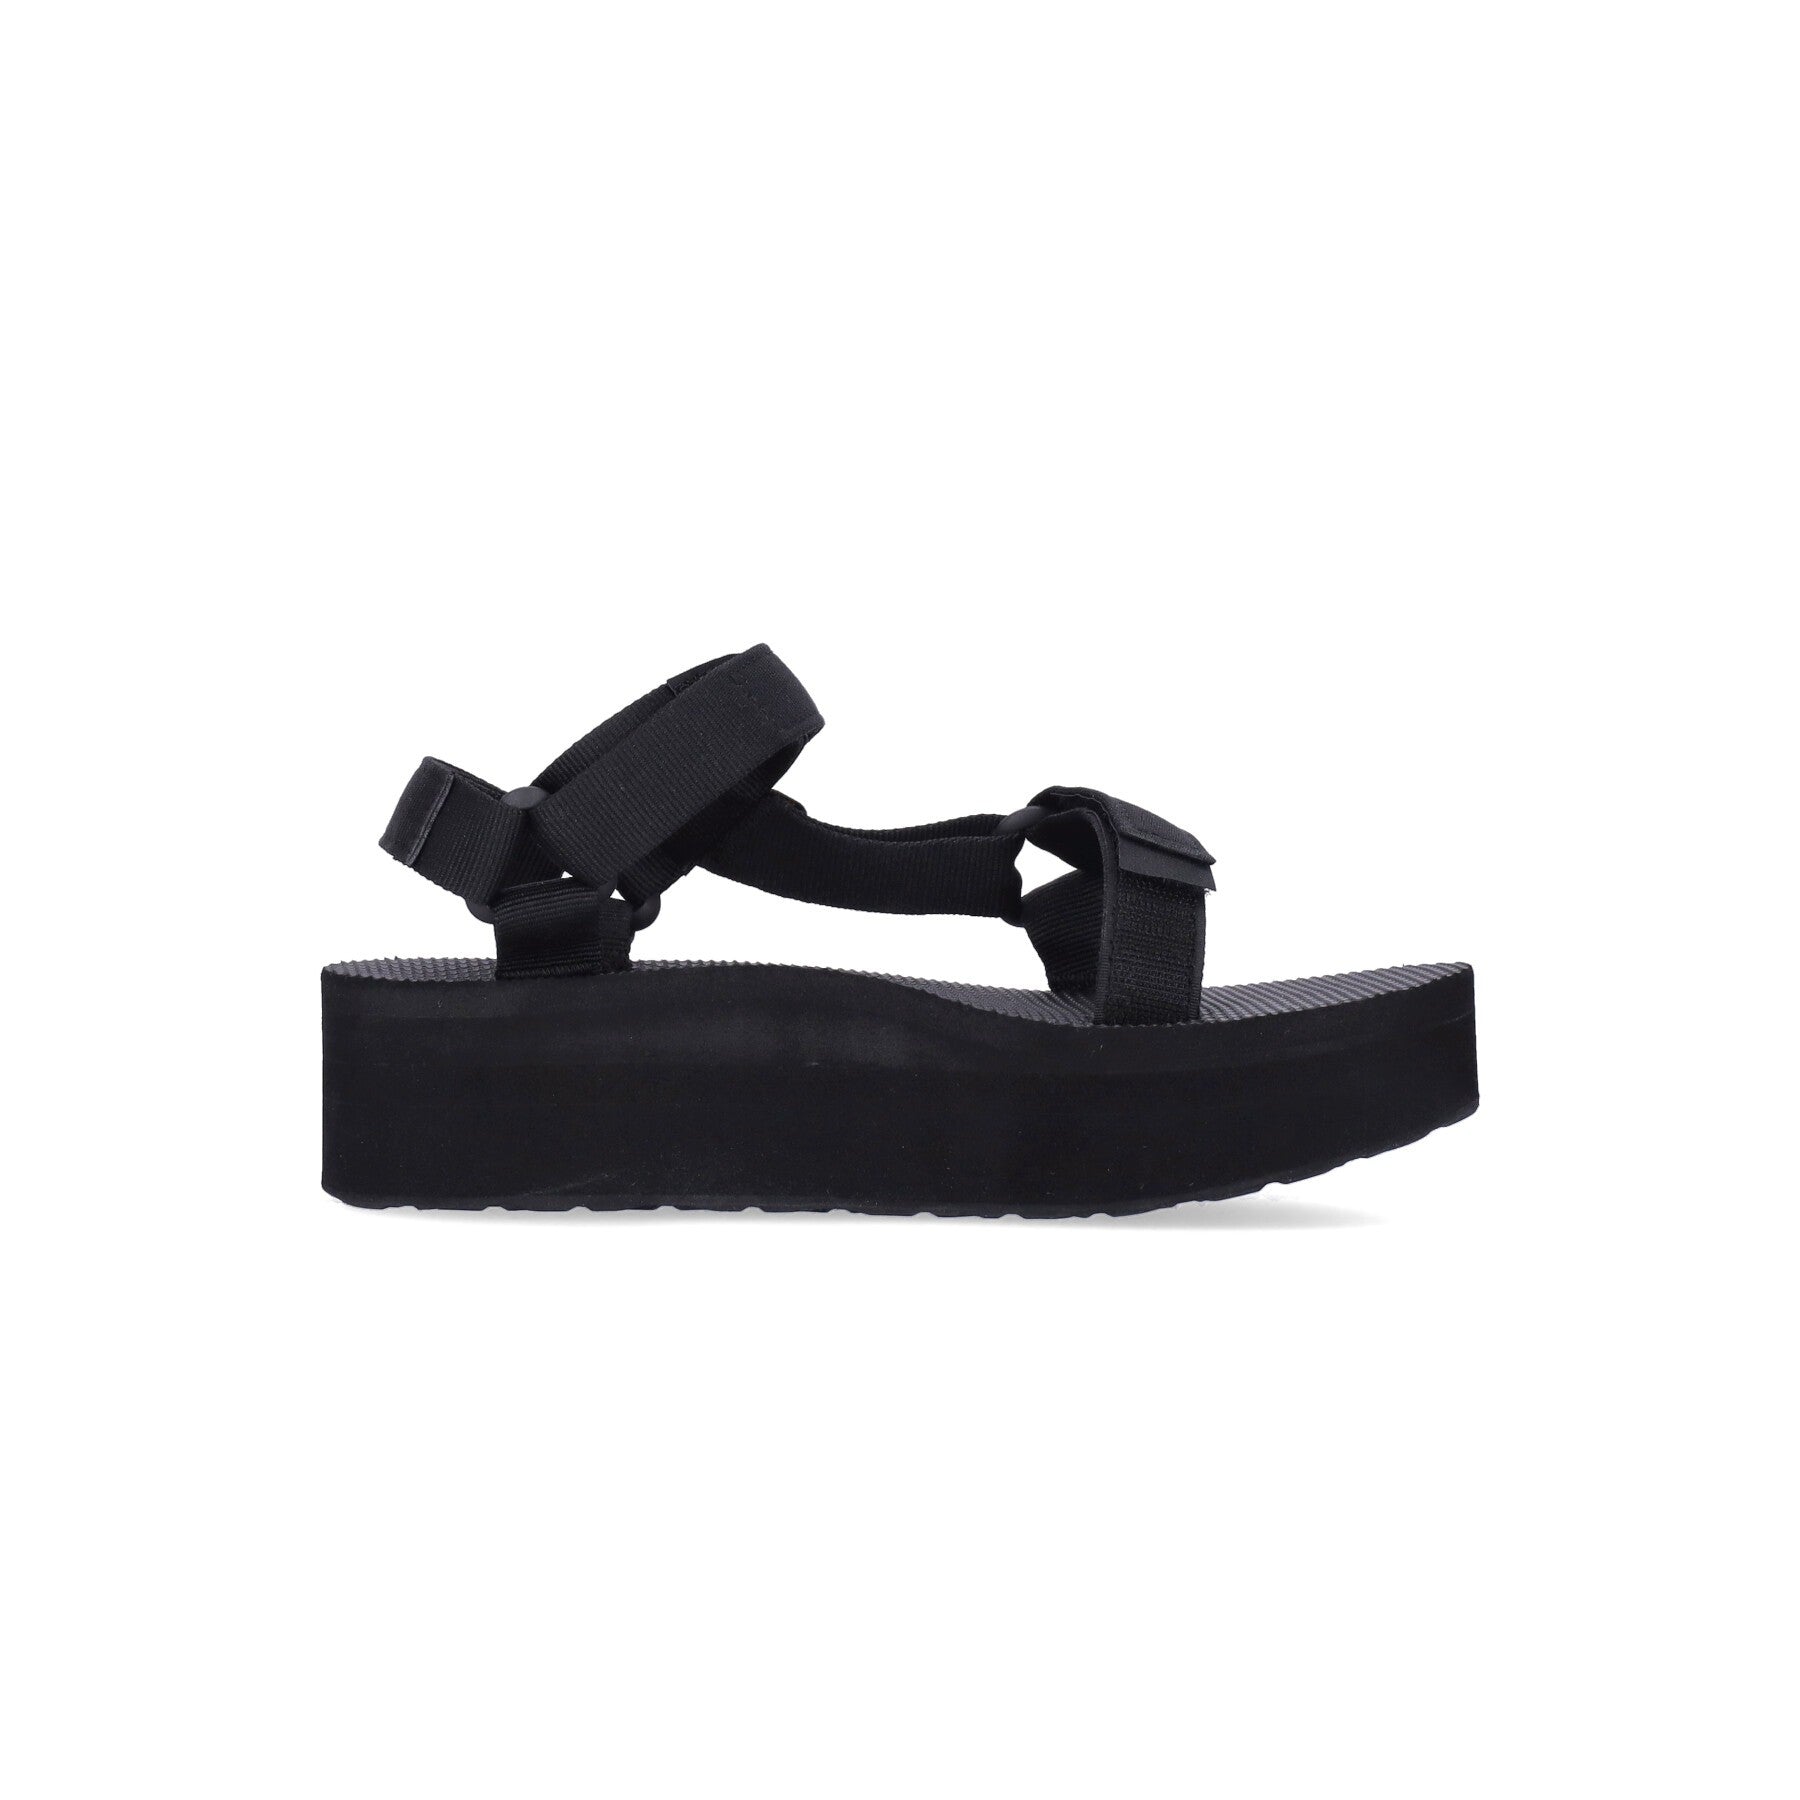 Sandalo Donna Flatform Universal W Sandalo Black 1008844-BLK